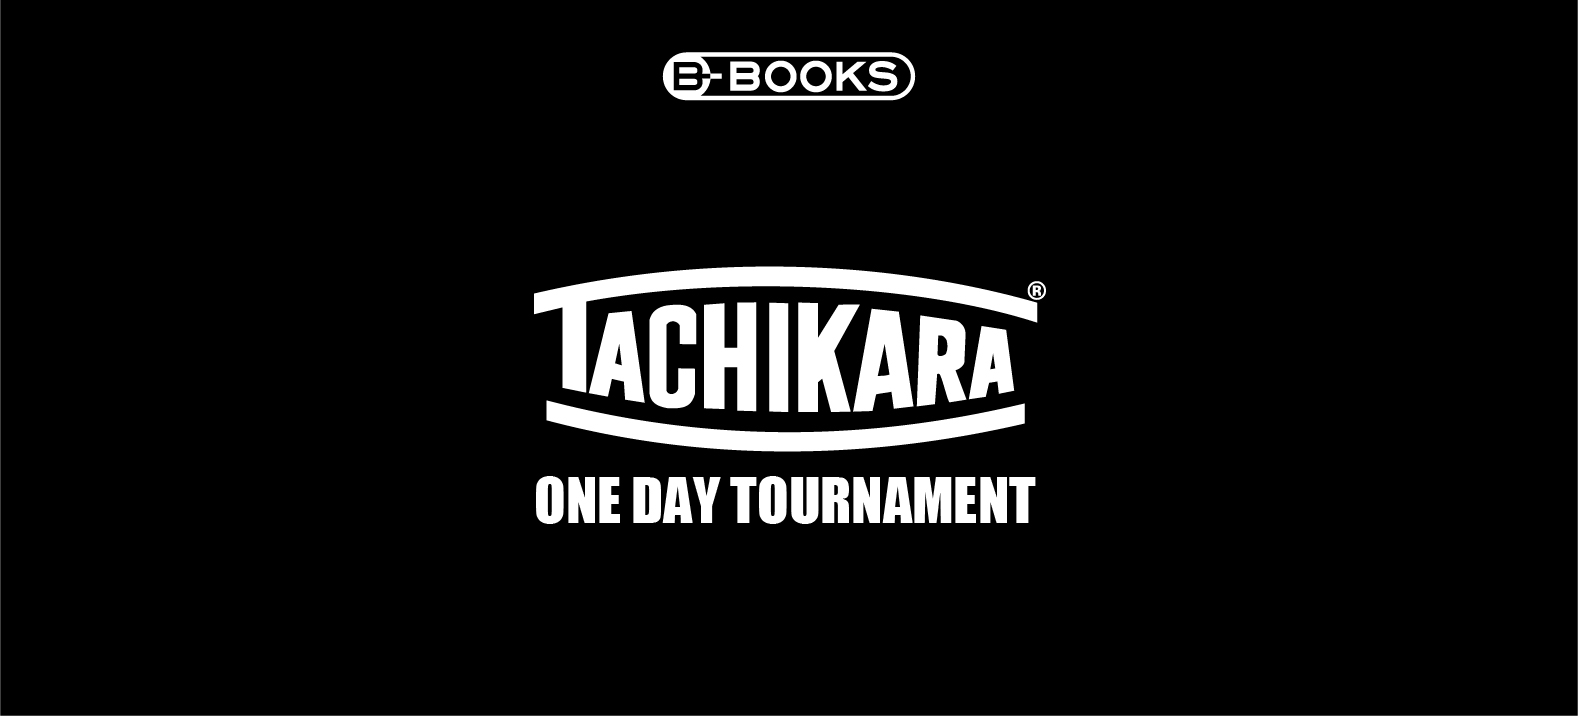 TACHIKARA 1DAY TOURNAMENT for WOMEN